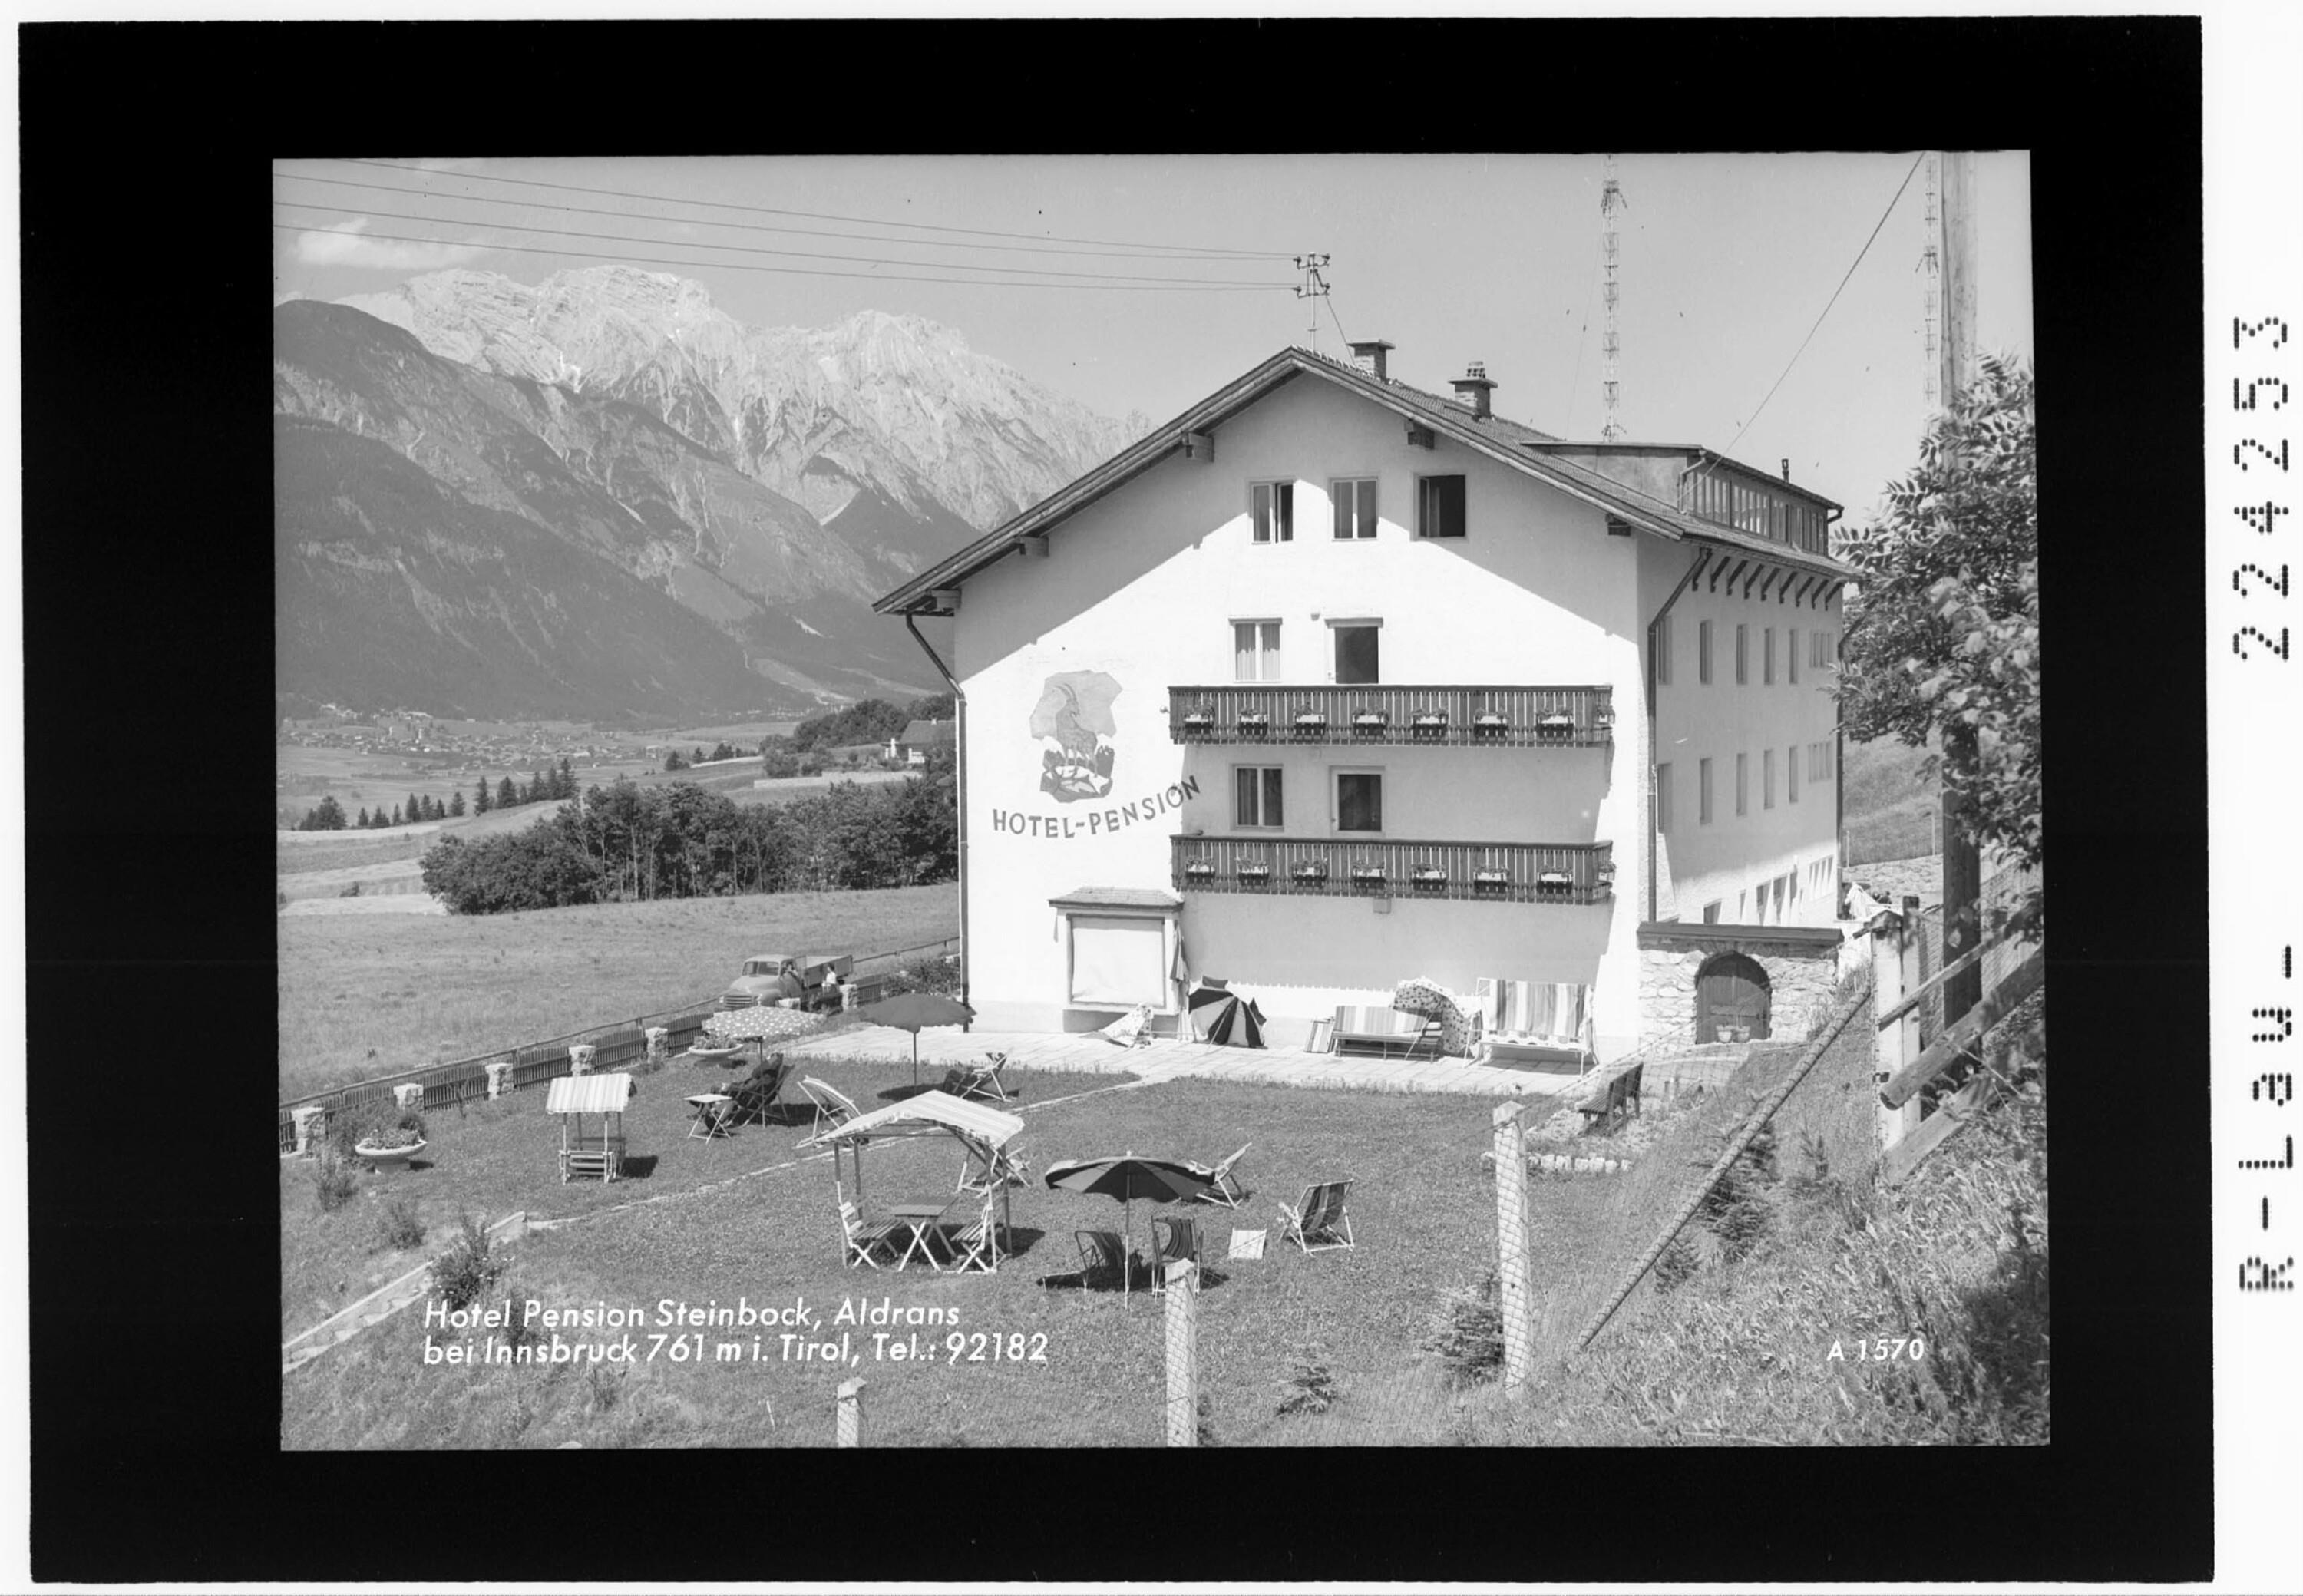 Hotel Pension Steinbock / Aldrans bei Innsbruck 761 m / Tirol></div>


    <hr>
    <div class=